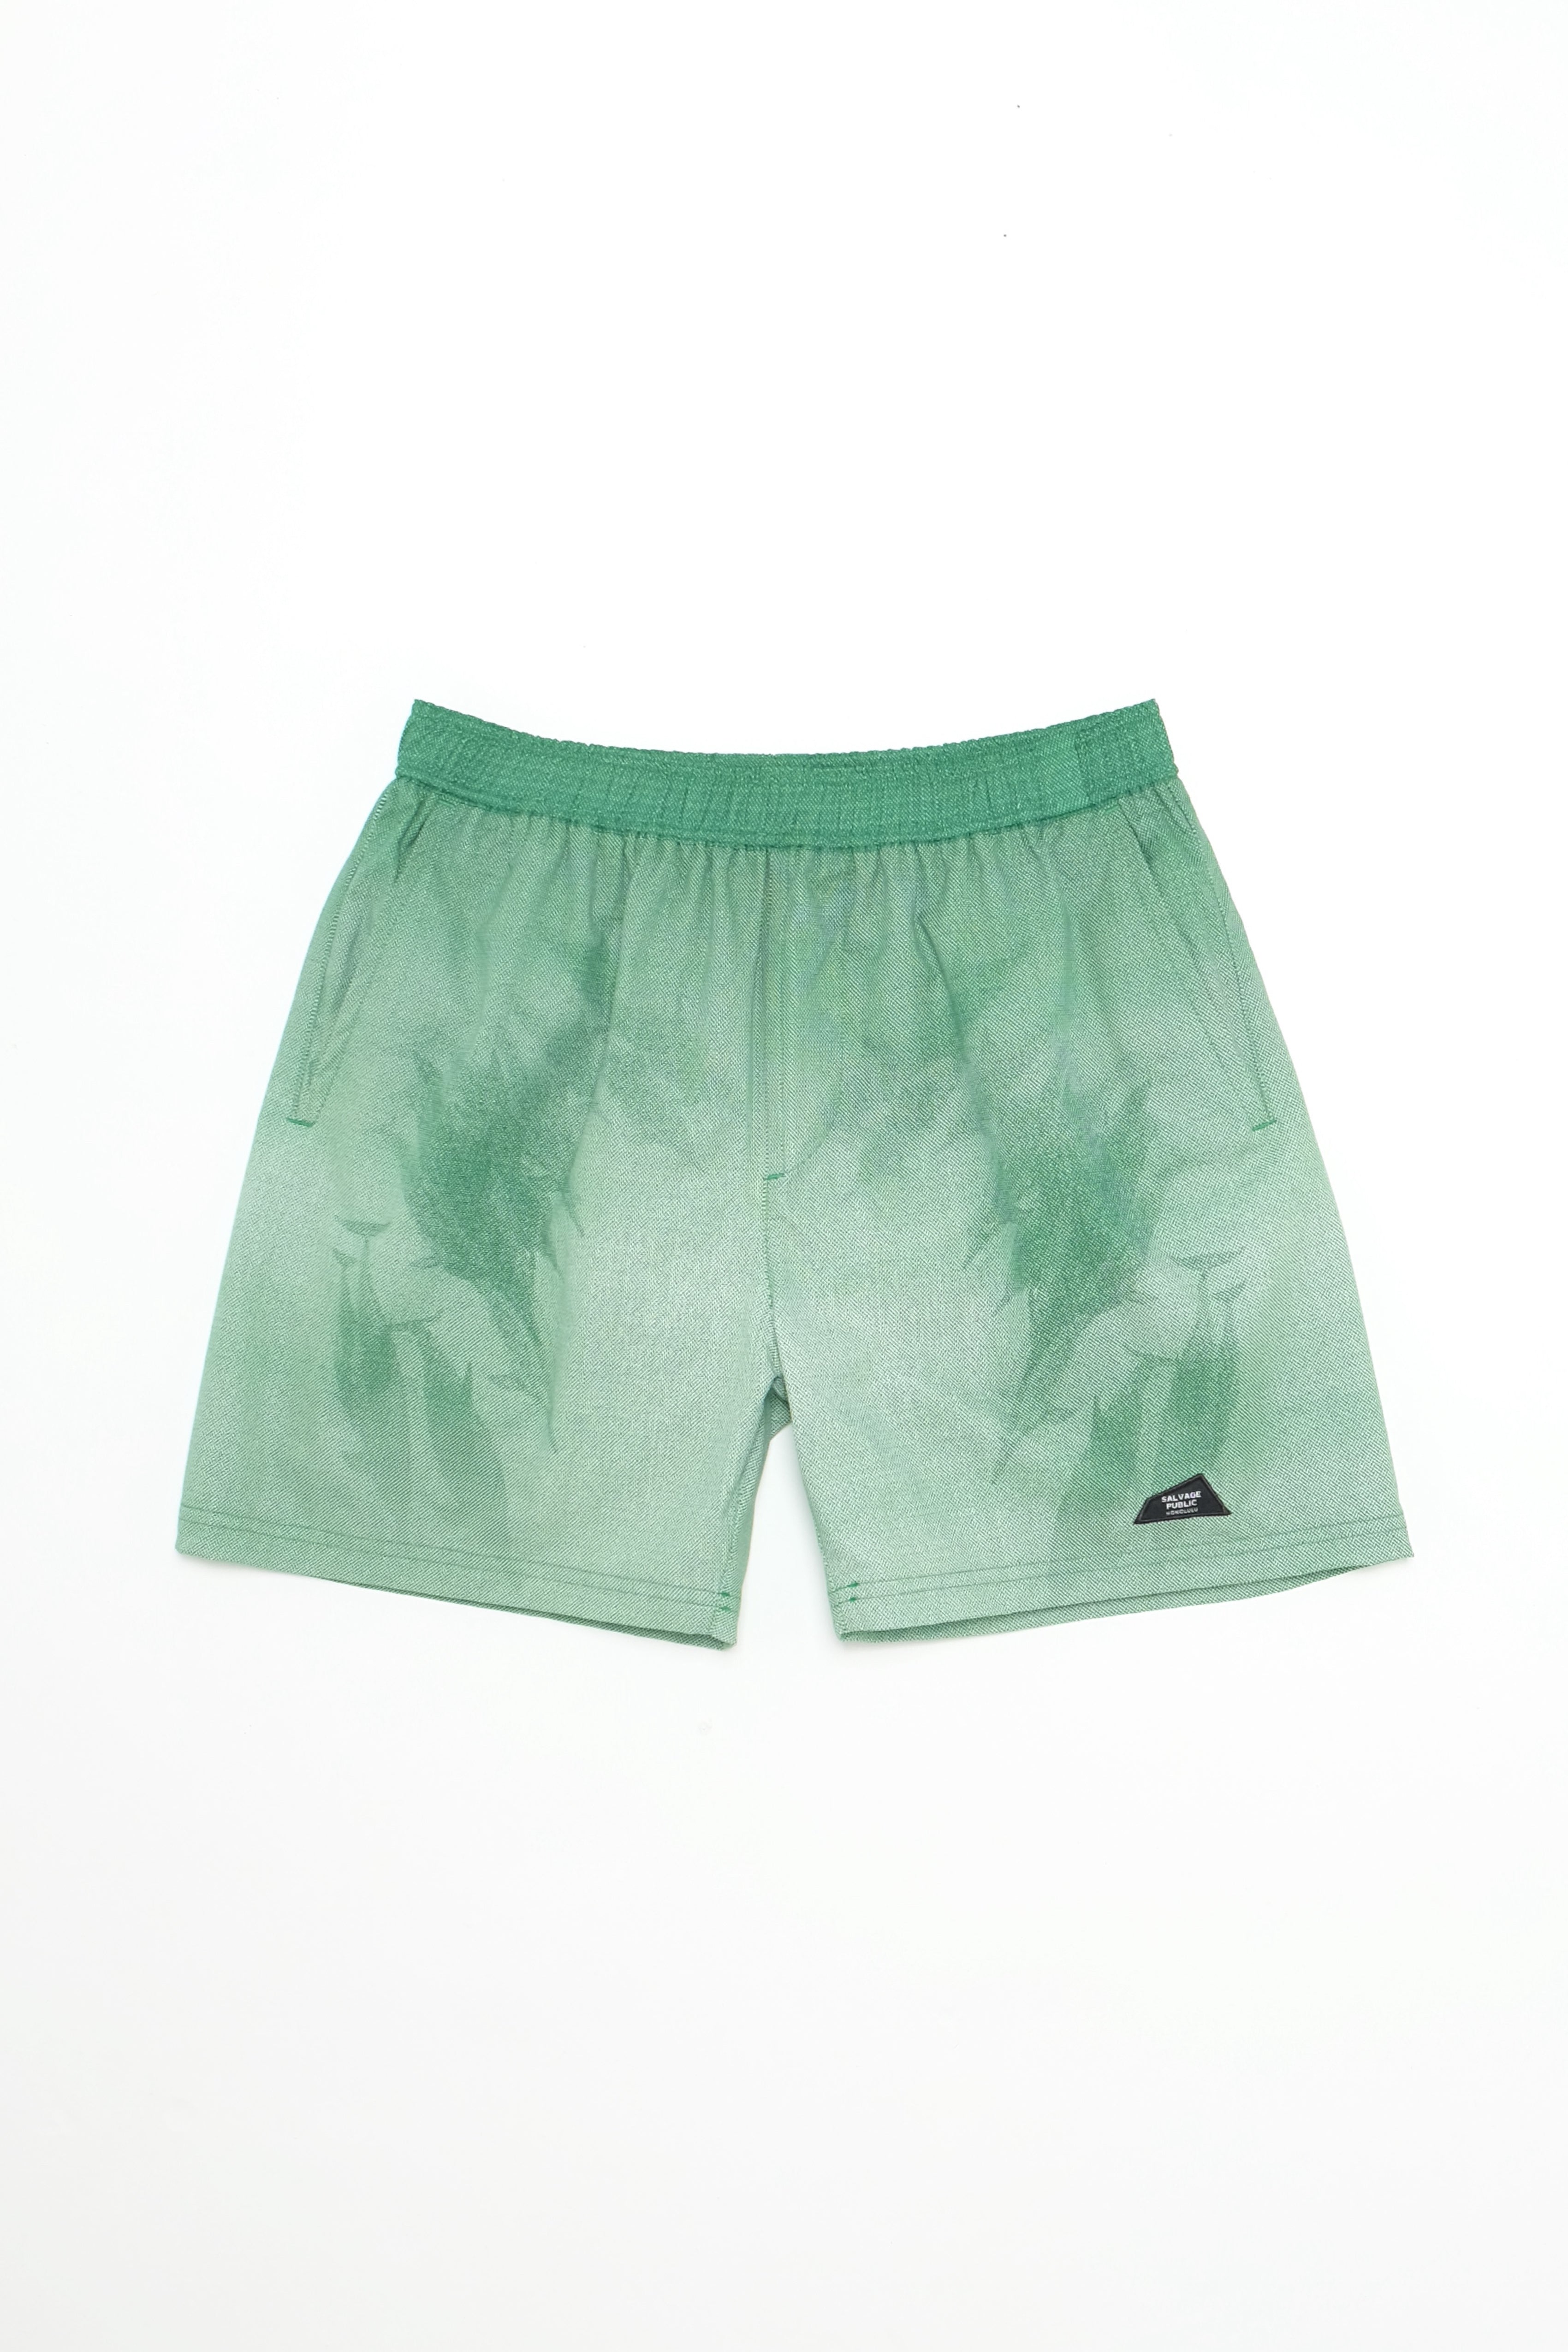 Swim Shorts - Halftone Dolphins - Green